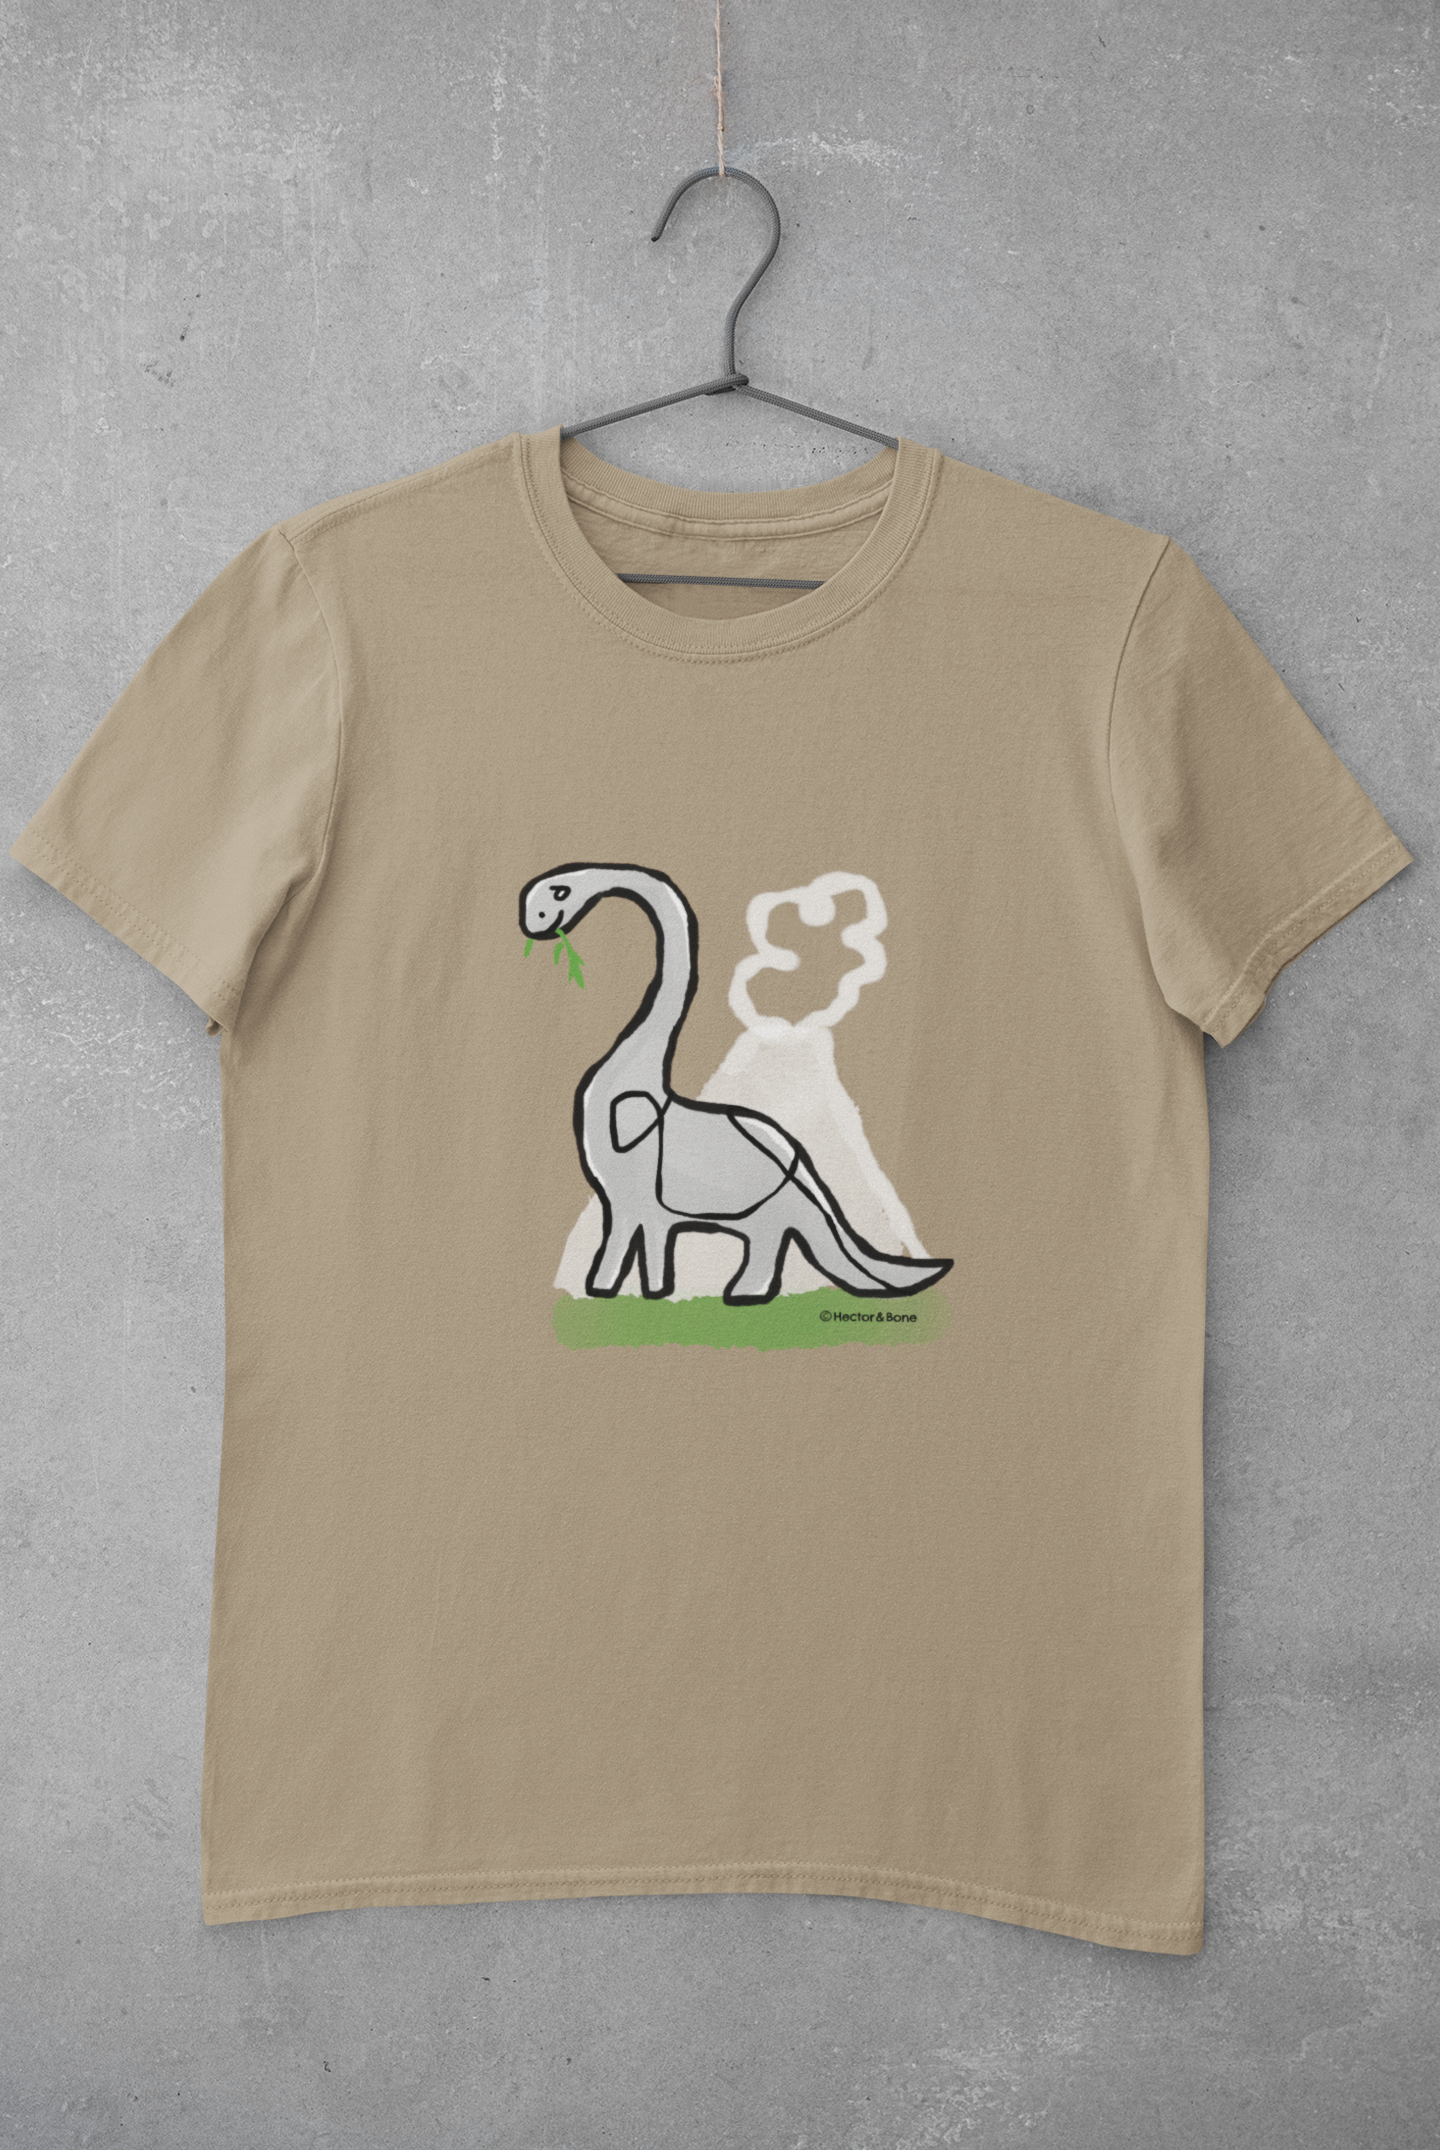 Derek Dinosaur T-shirt - Illustrated Vegan Cotton T-Shirt